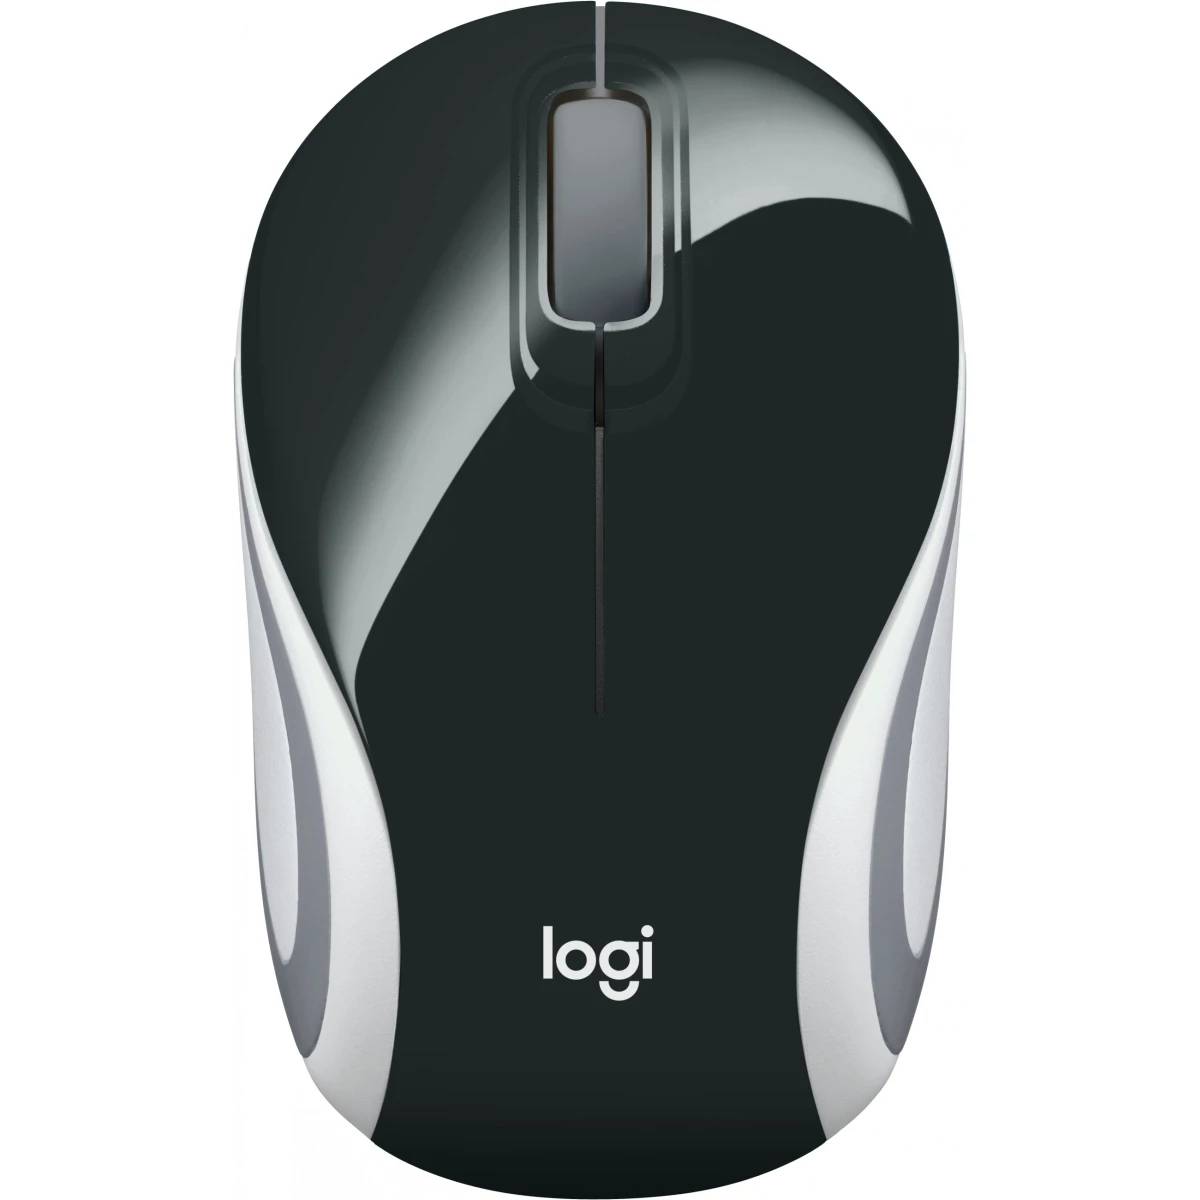 Logitech Wireless Mini Mouse M187 schwarz